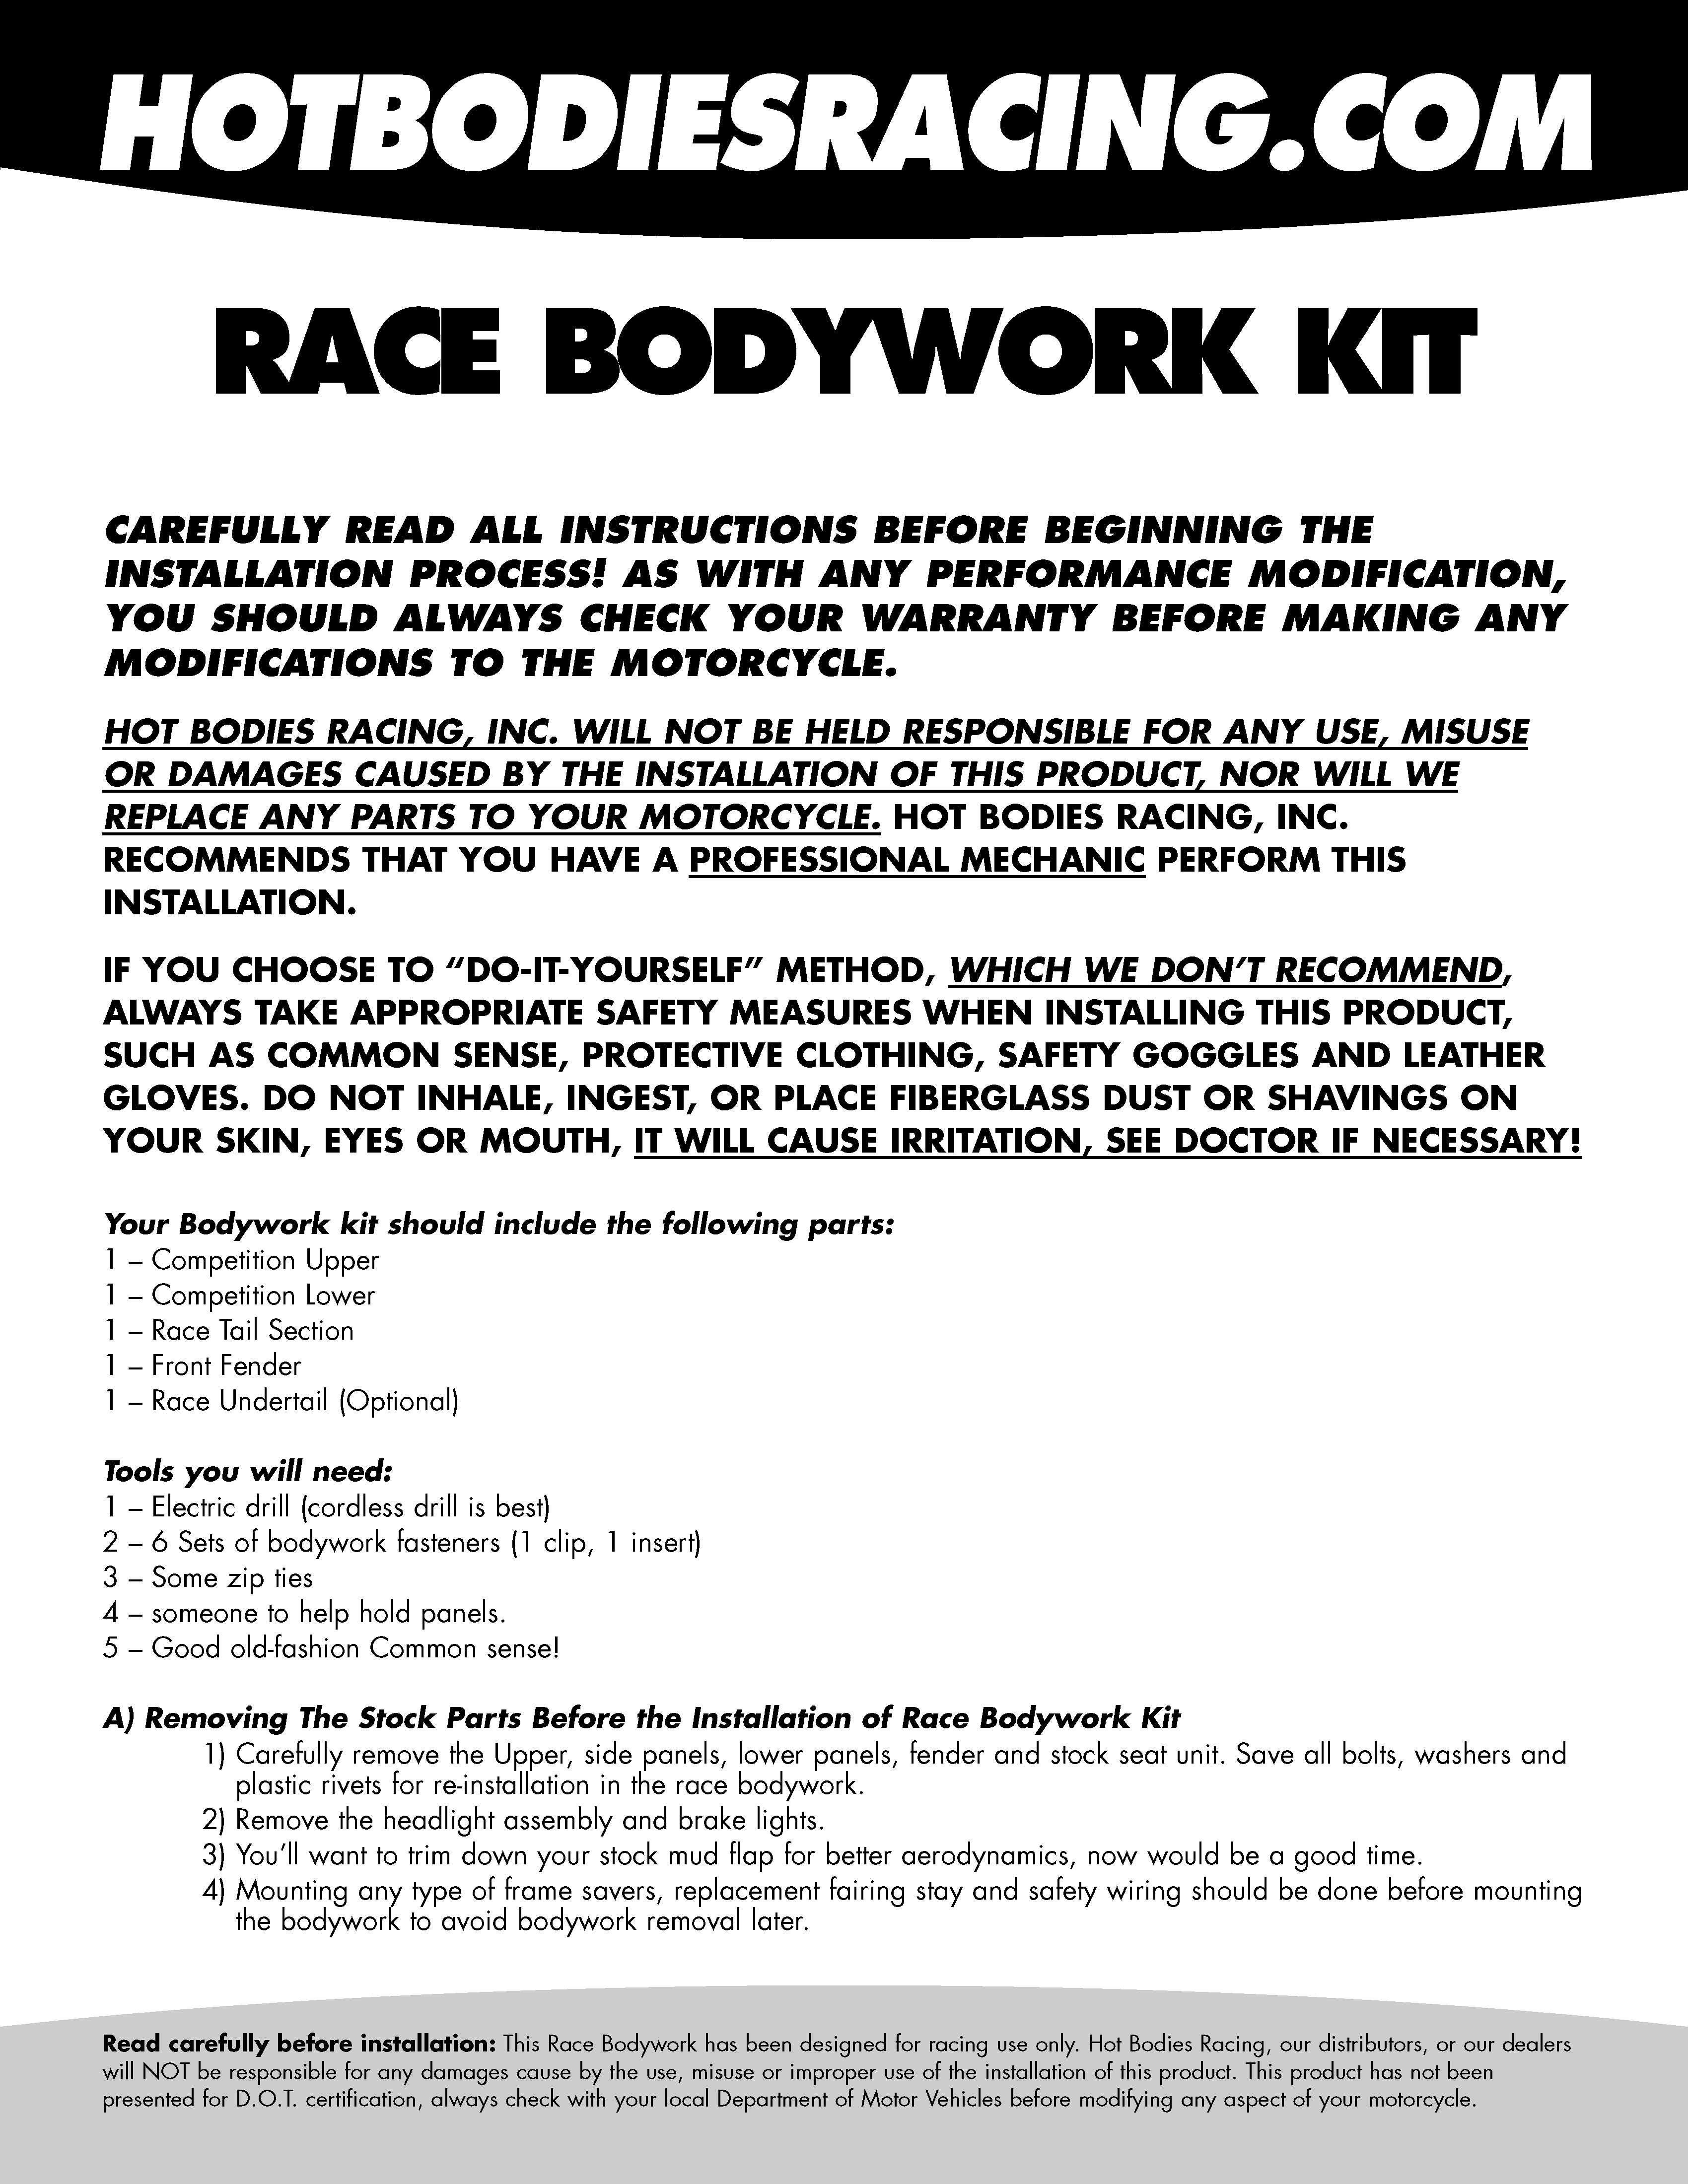 Race Bodywork Installation